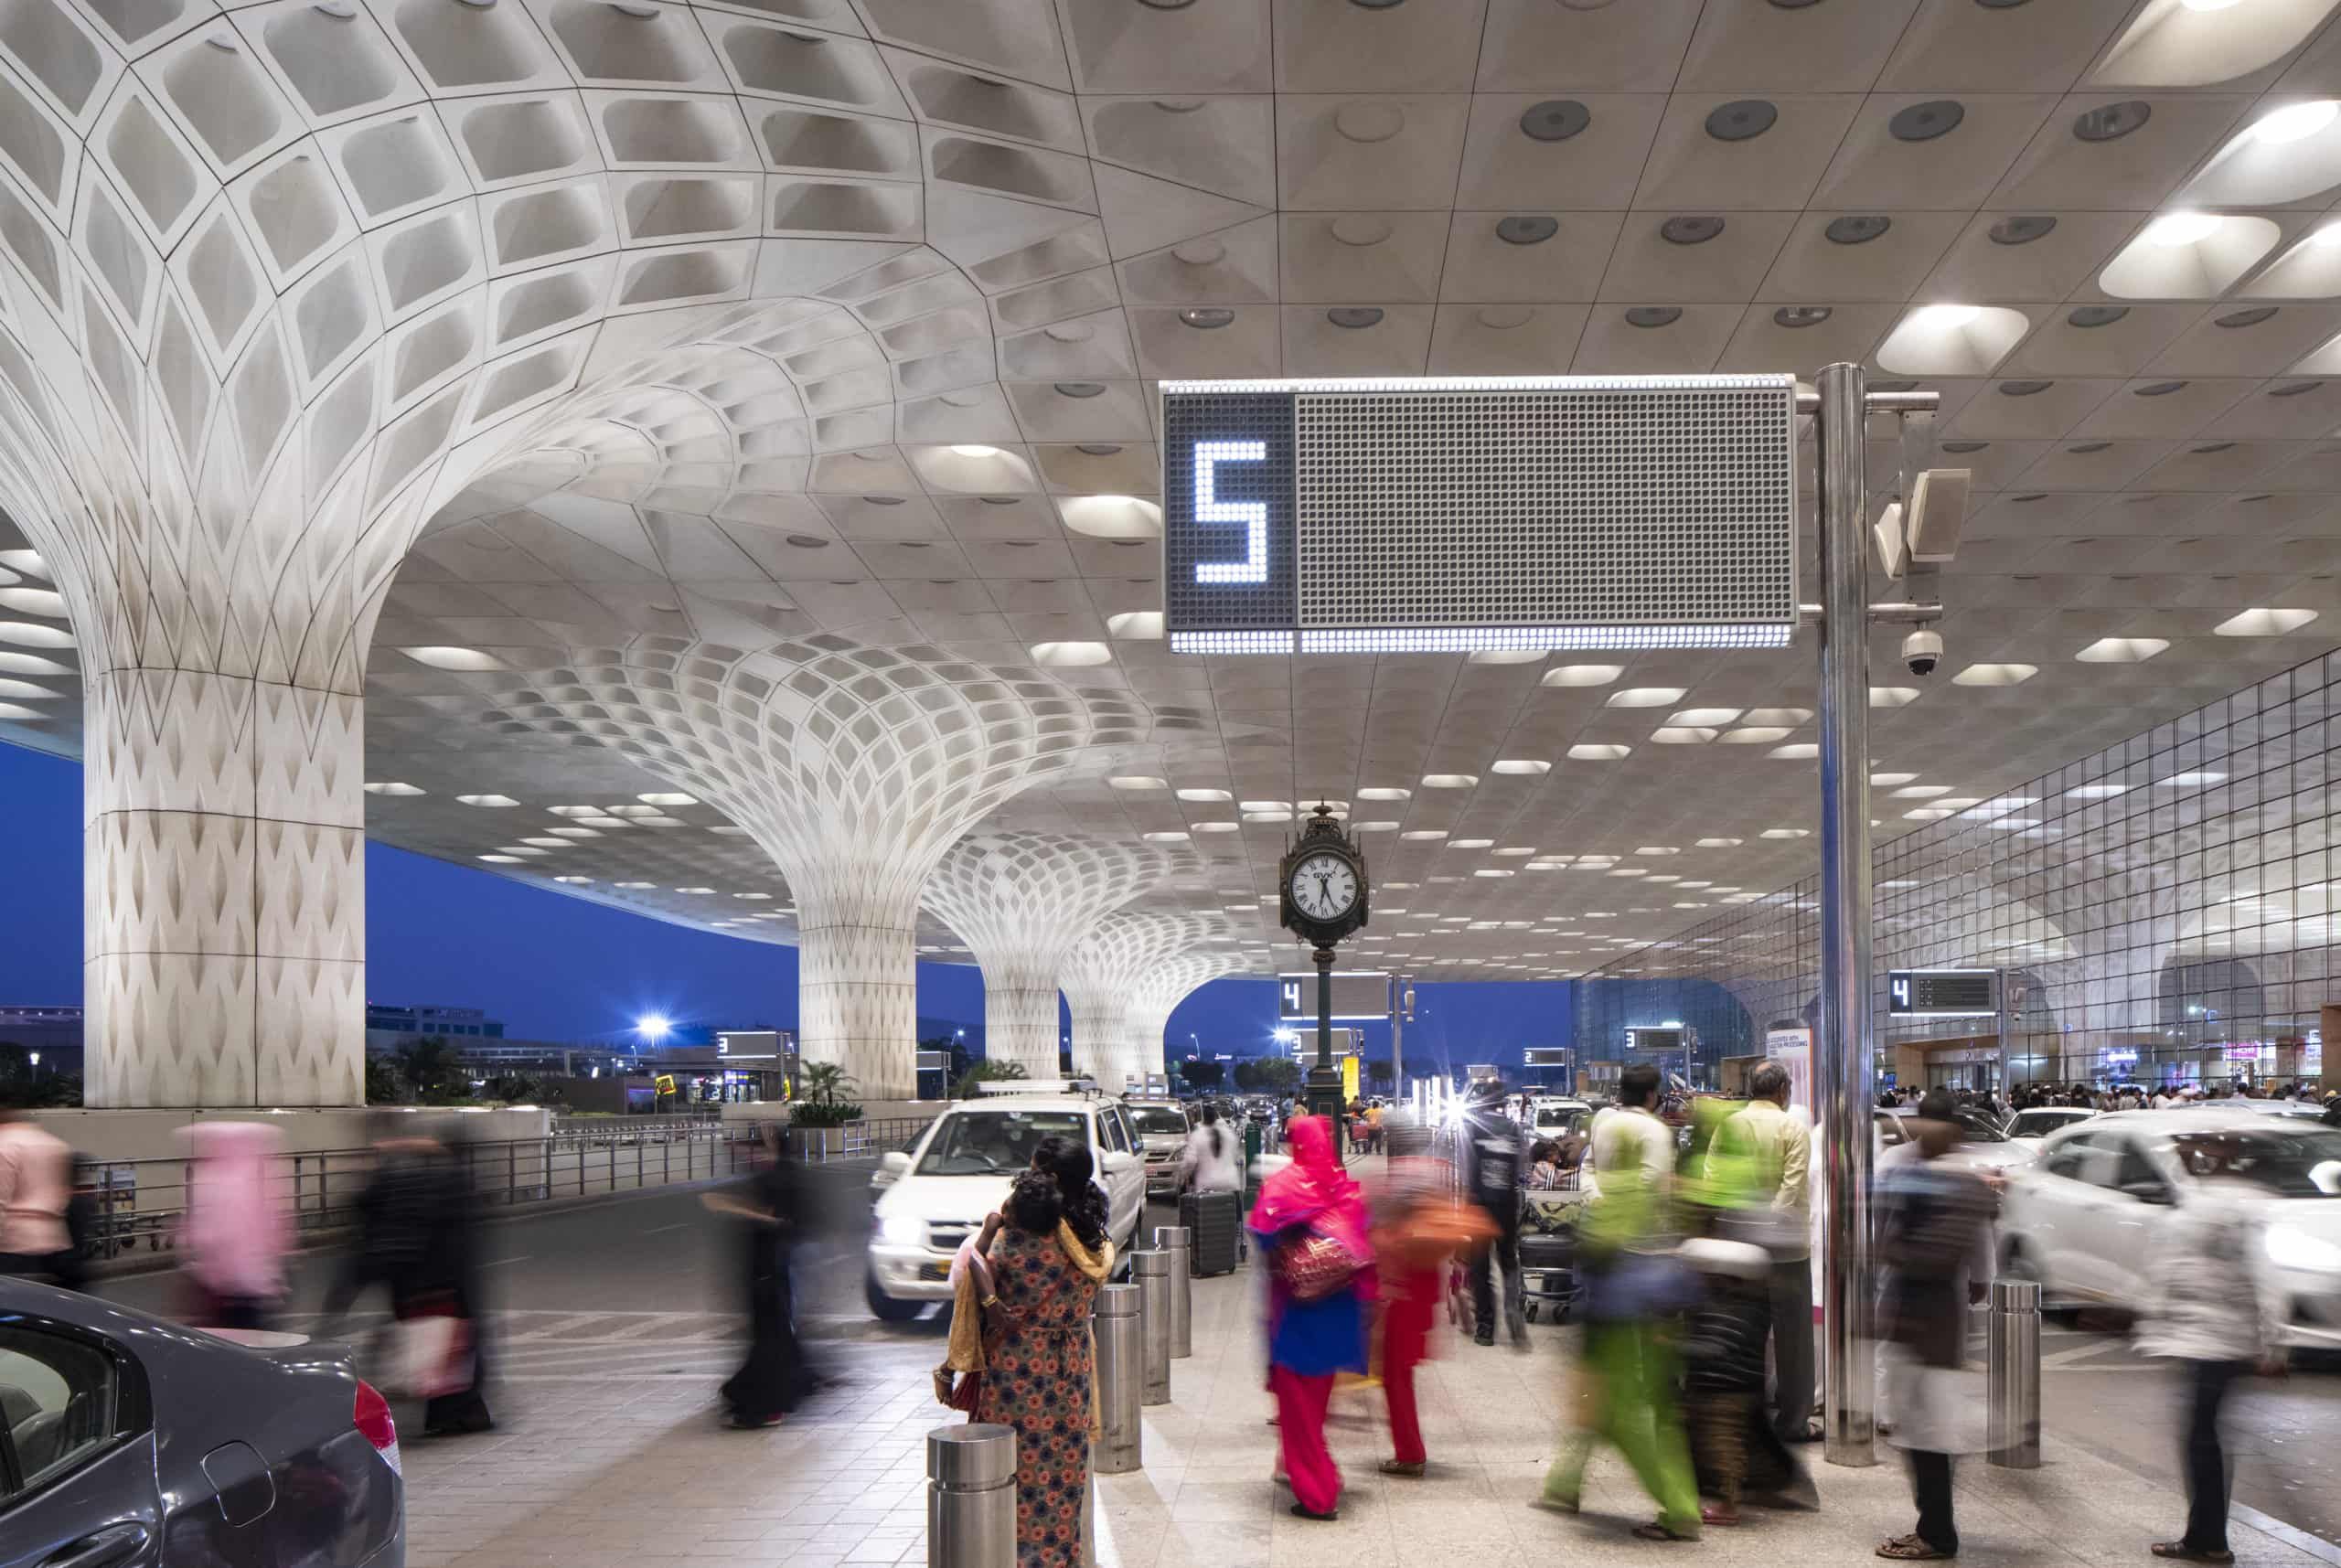 the white coffered canopy and the busy traffic of Mumbai’s Chhatrapati Shivaji International Airport Terminal 2